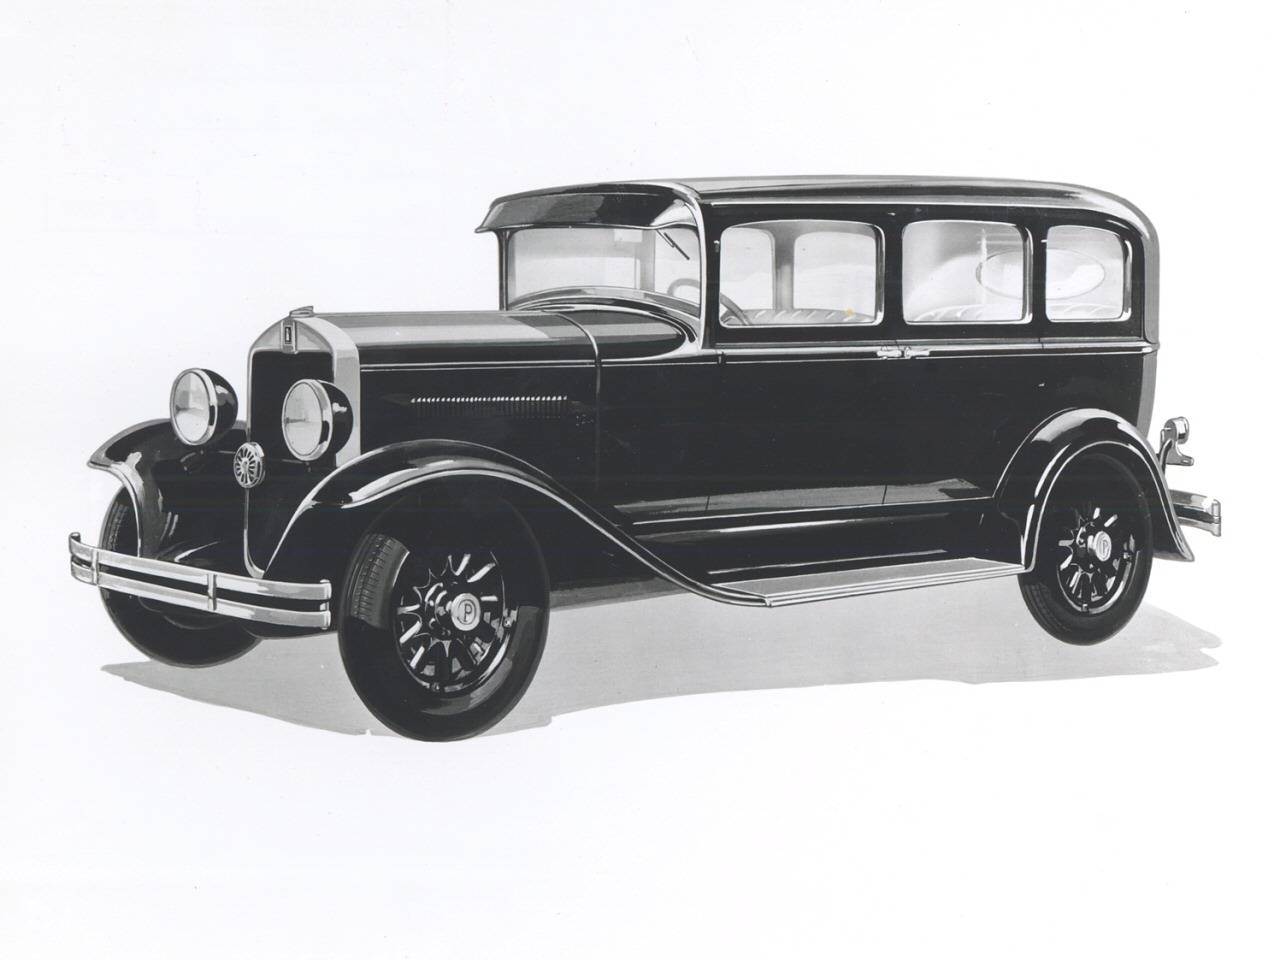  STARE SAMOCHODY - 1928 Plymouth 4-Door Sedan.jpg